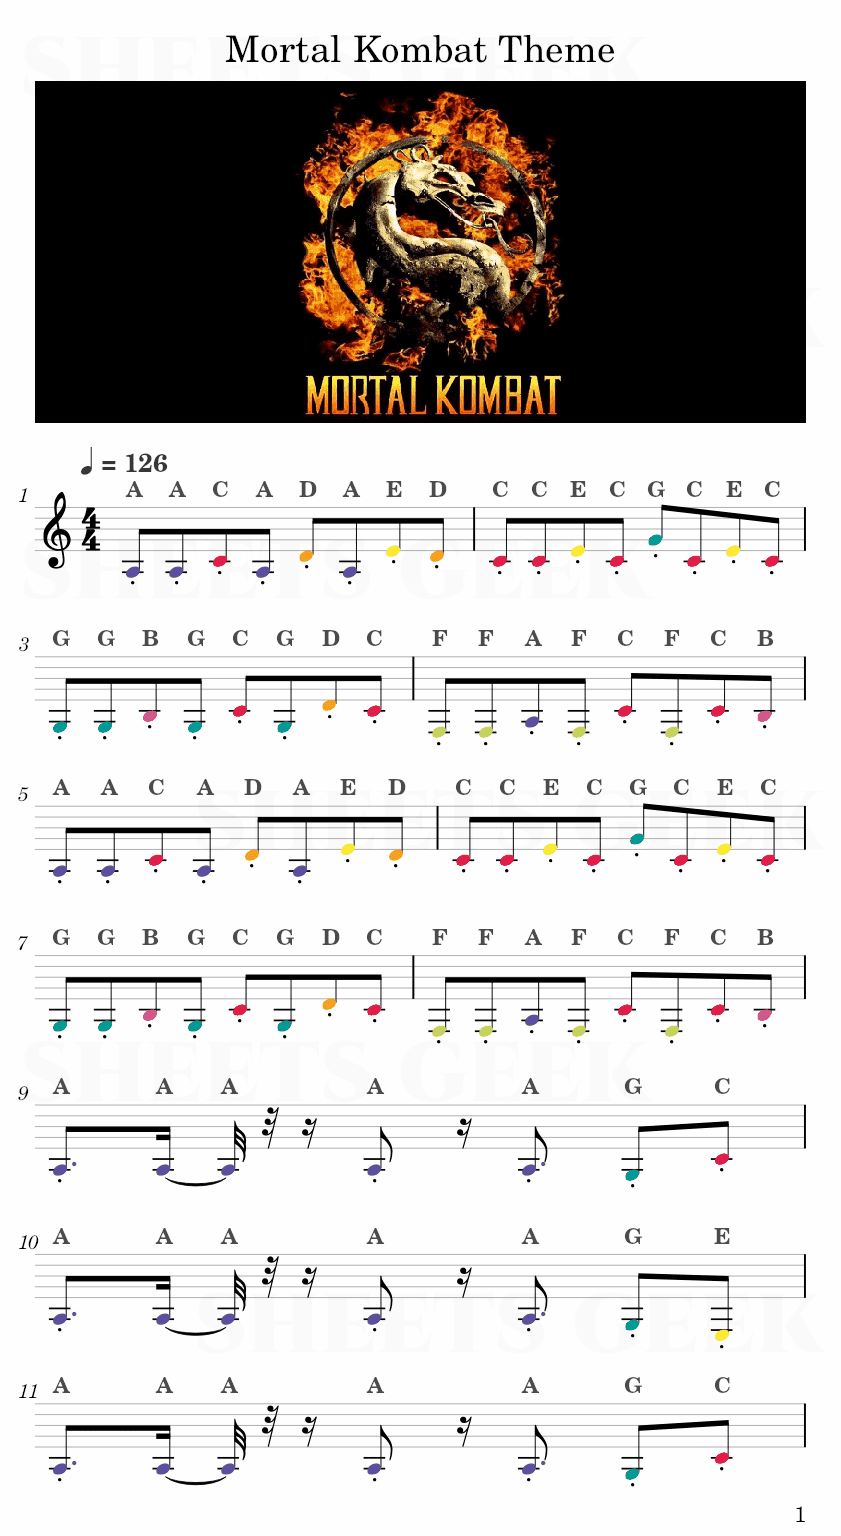 Mortal Kombat Theme Easy Sheet Music Free for piano, keyboard, flute, violin, sax, cello page 1